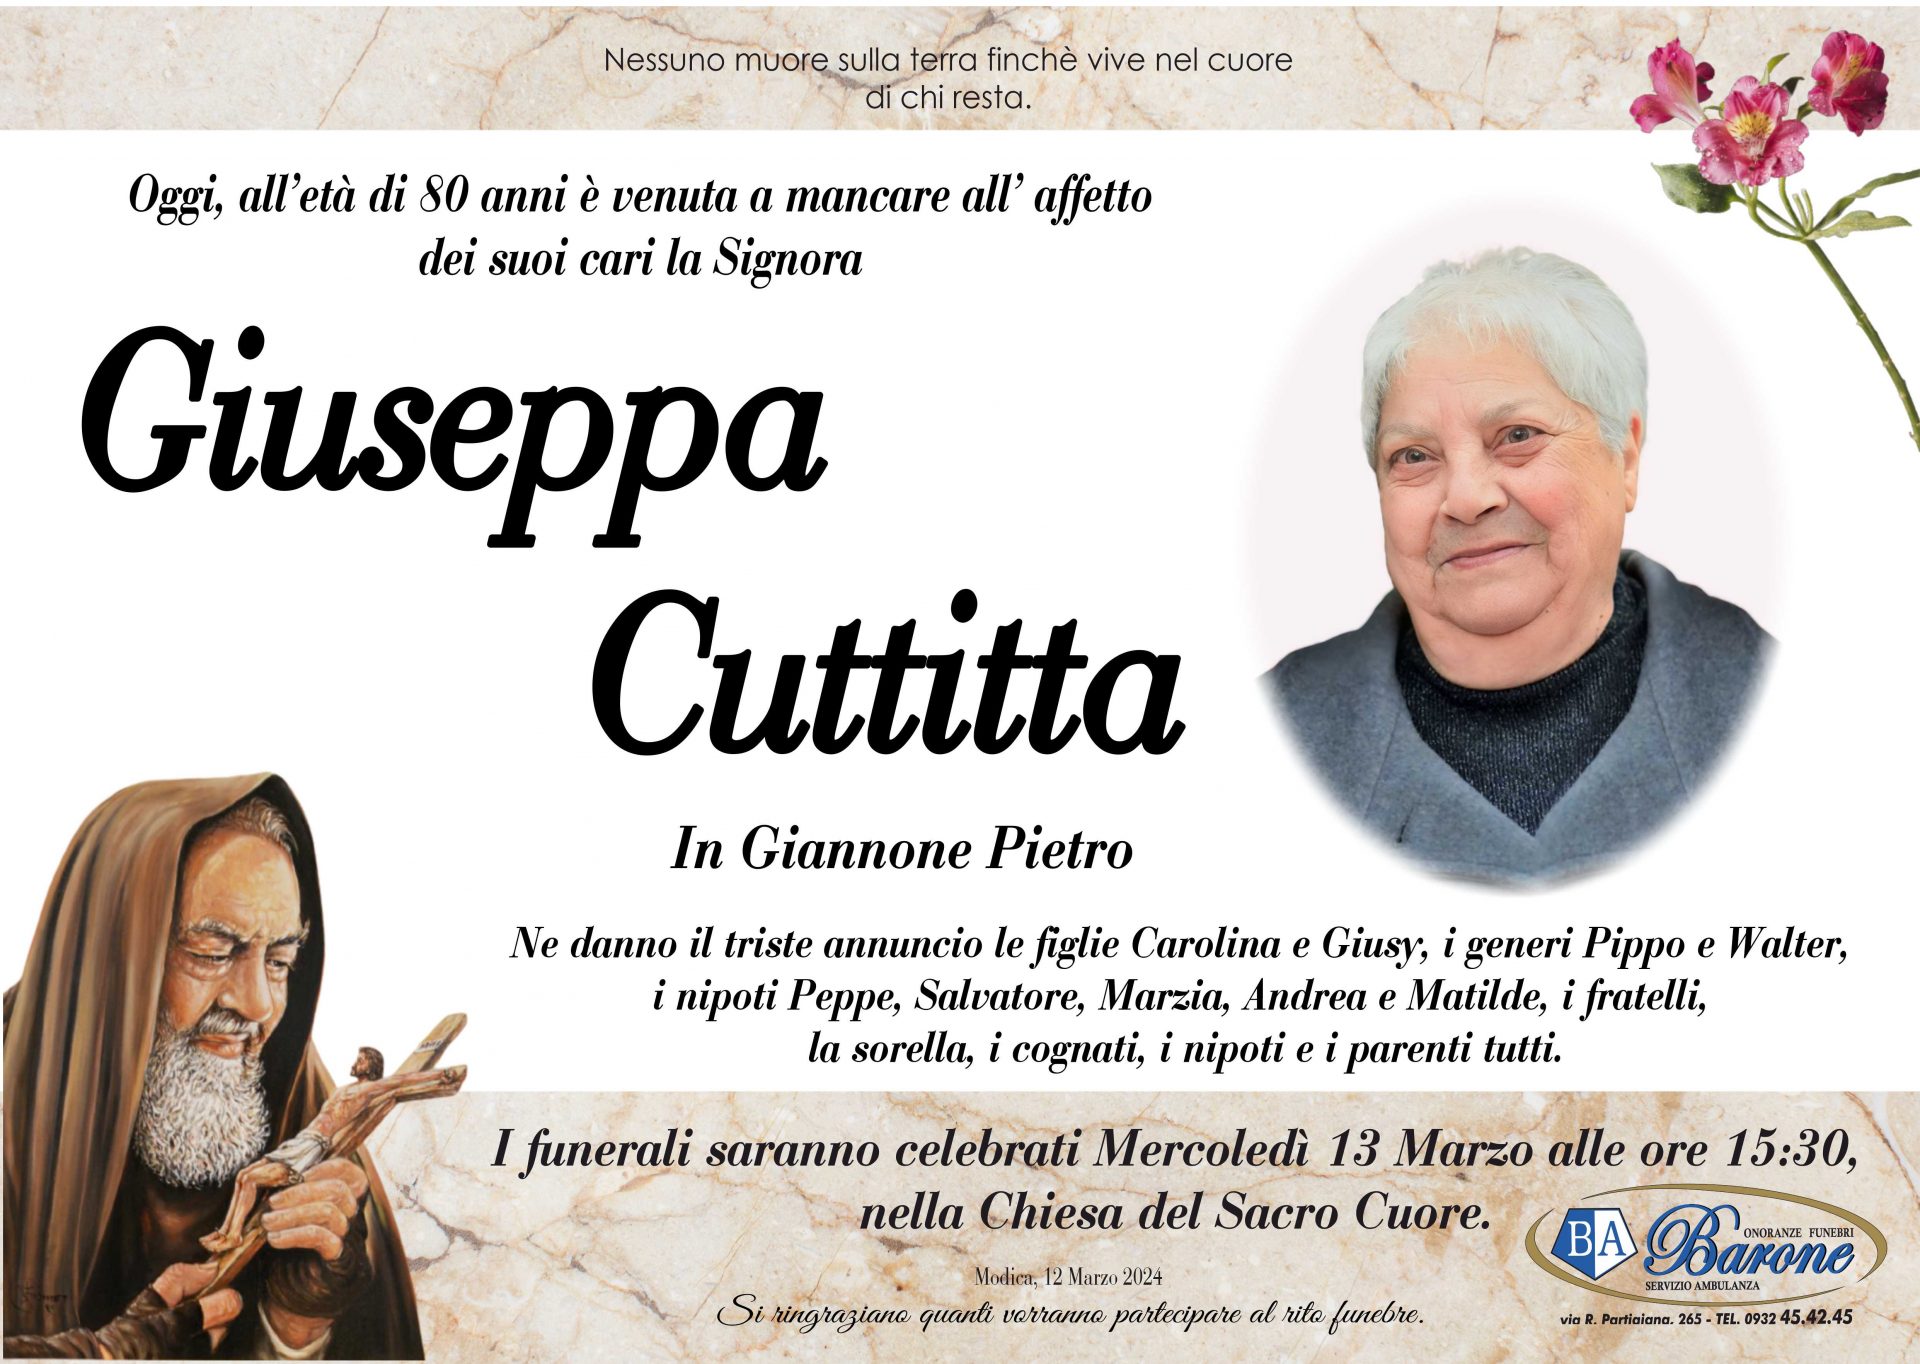 Giuseppa Cuttitta